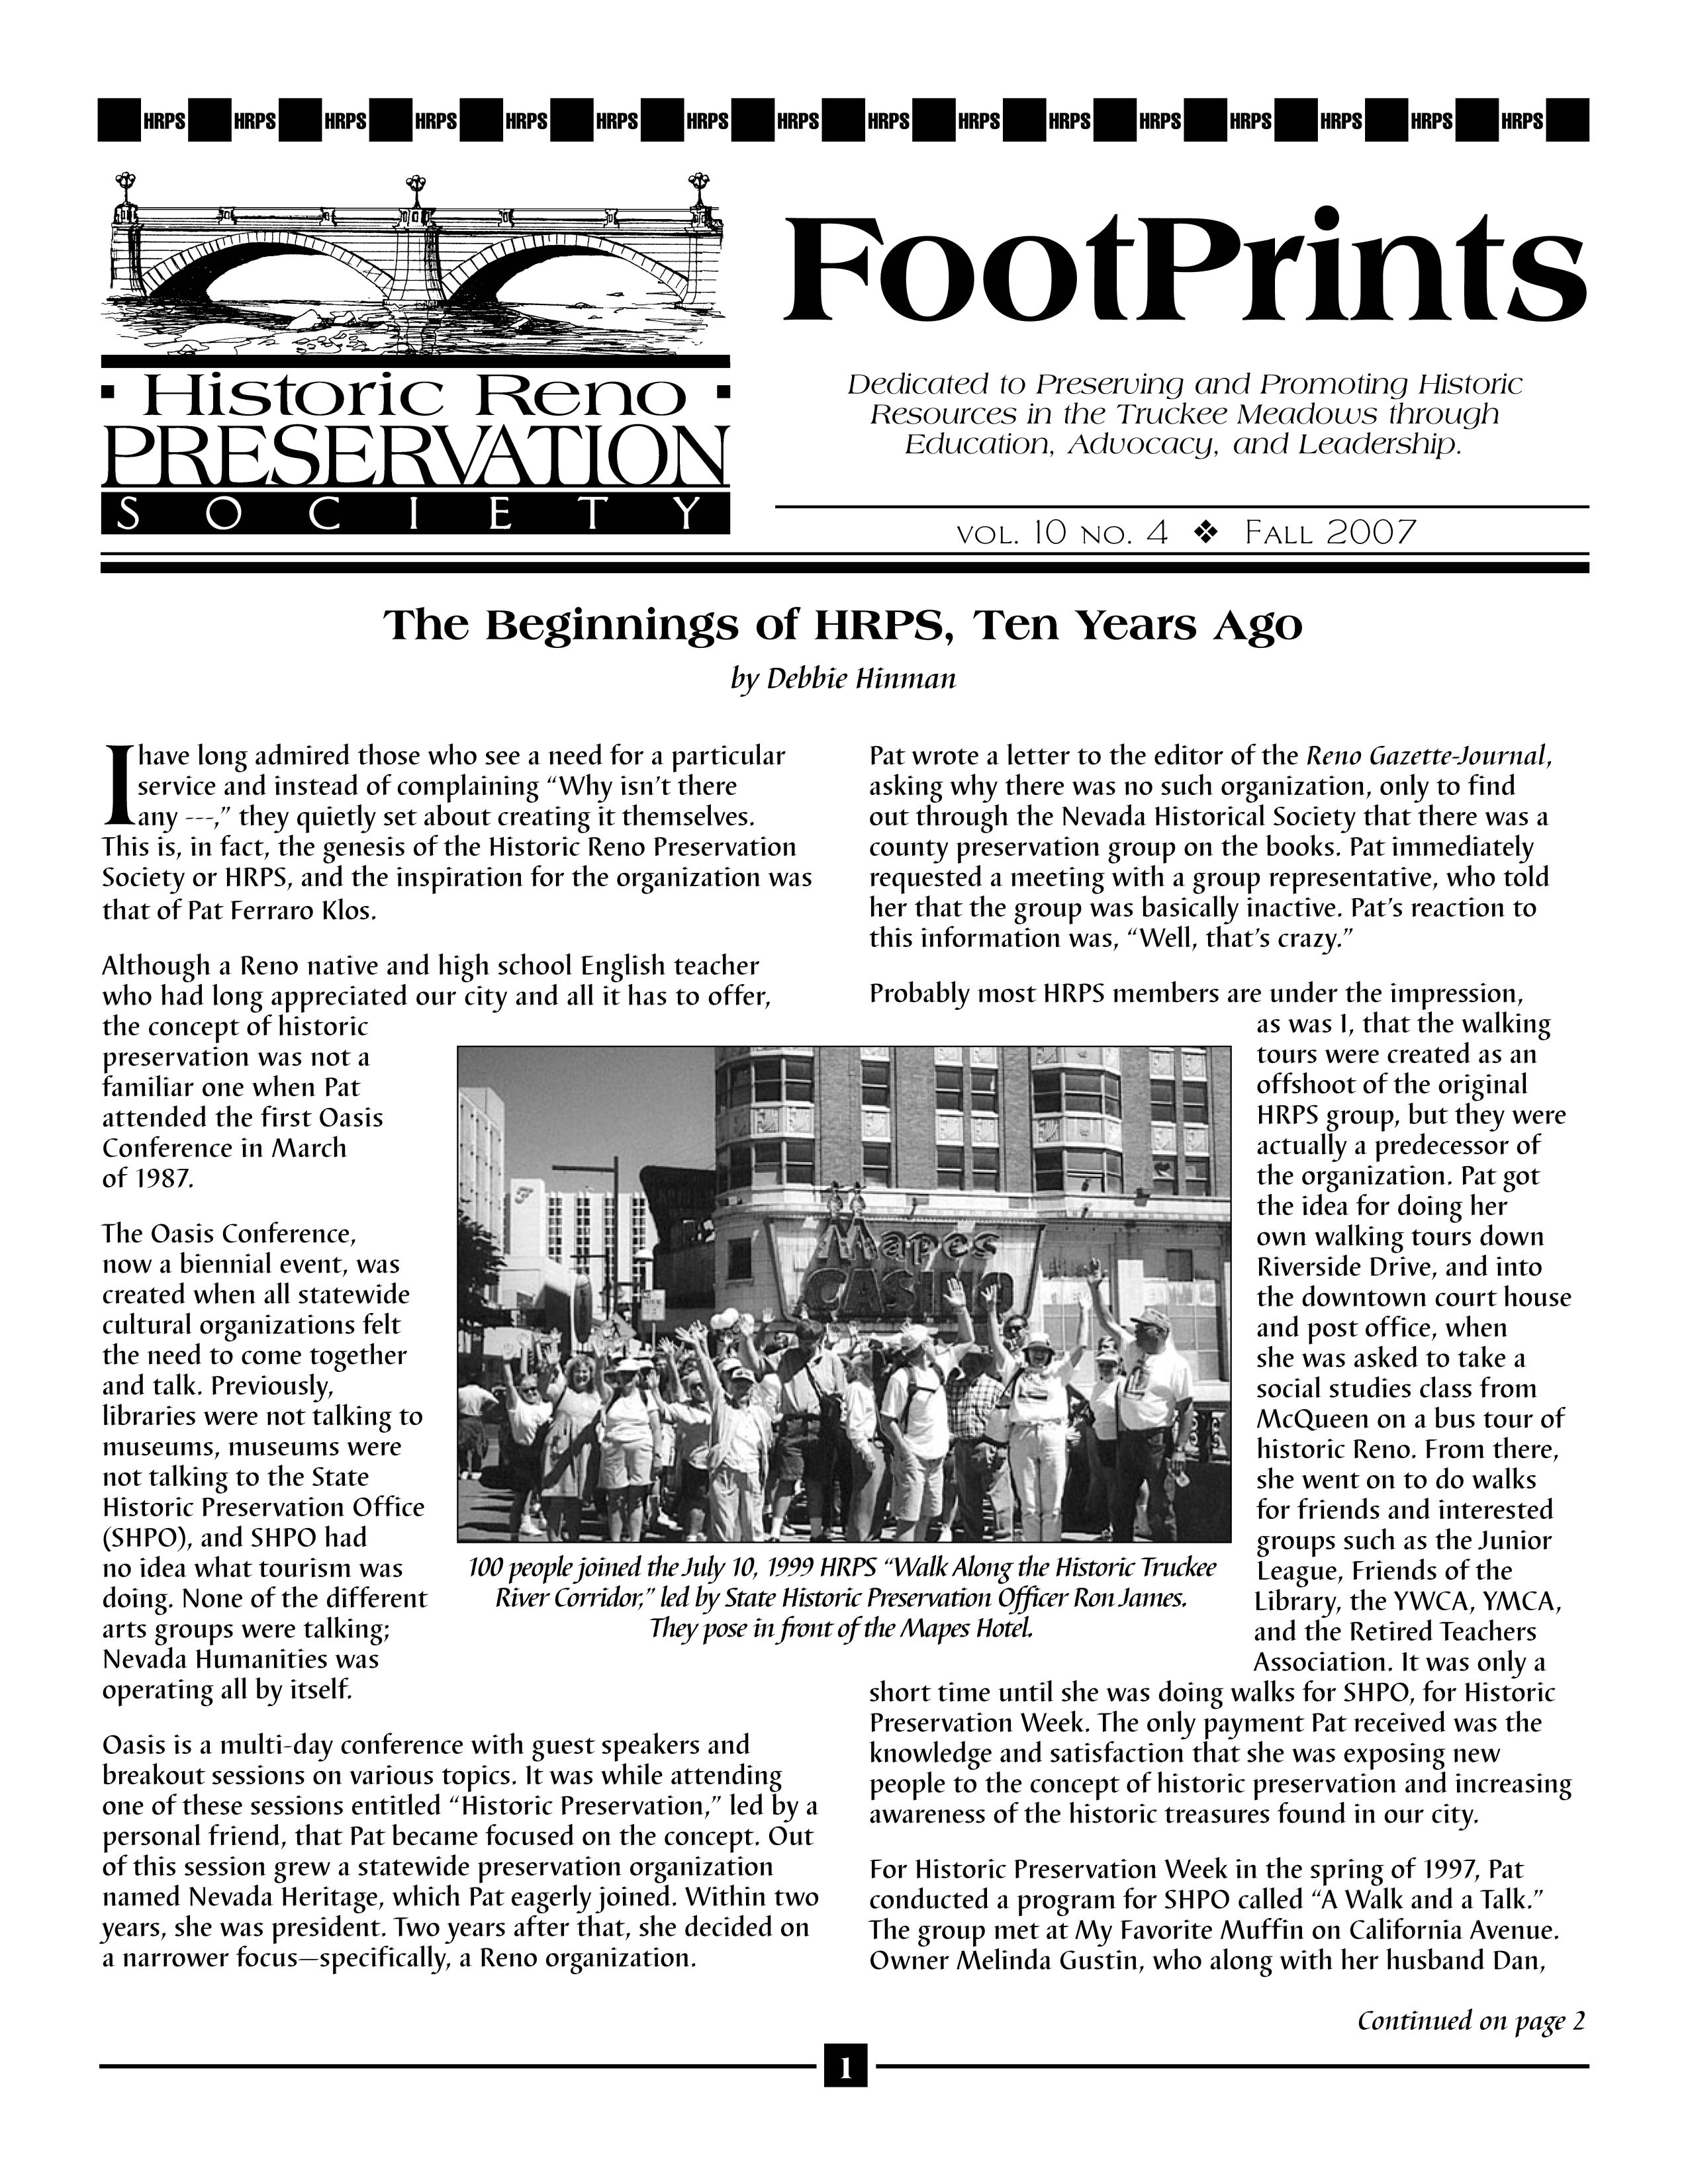 FootPrints Volume 10, Number 4, Fall 2007